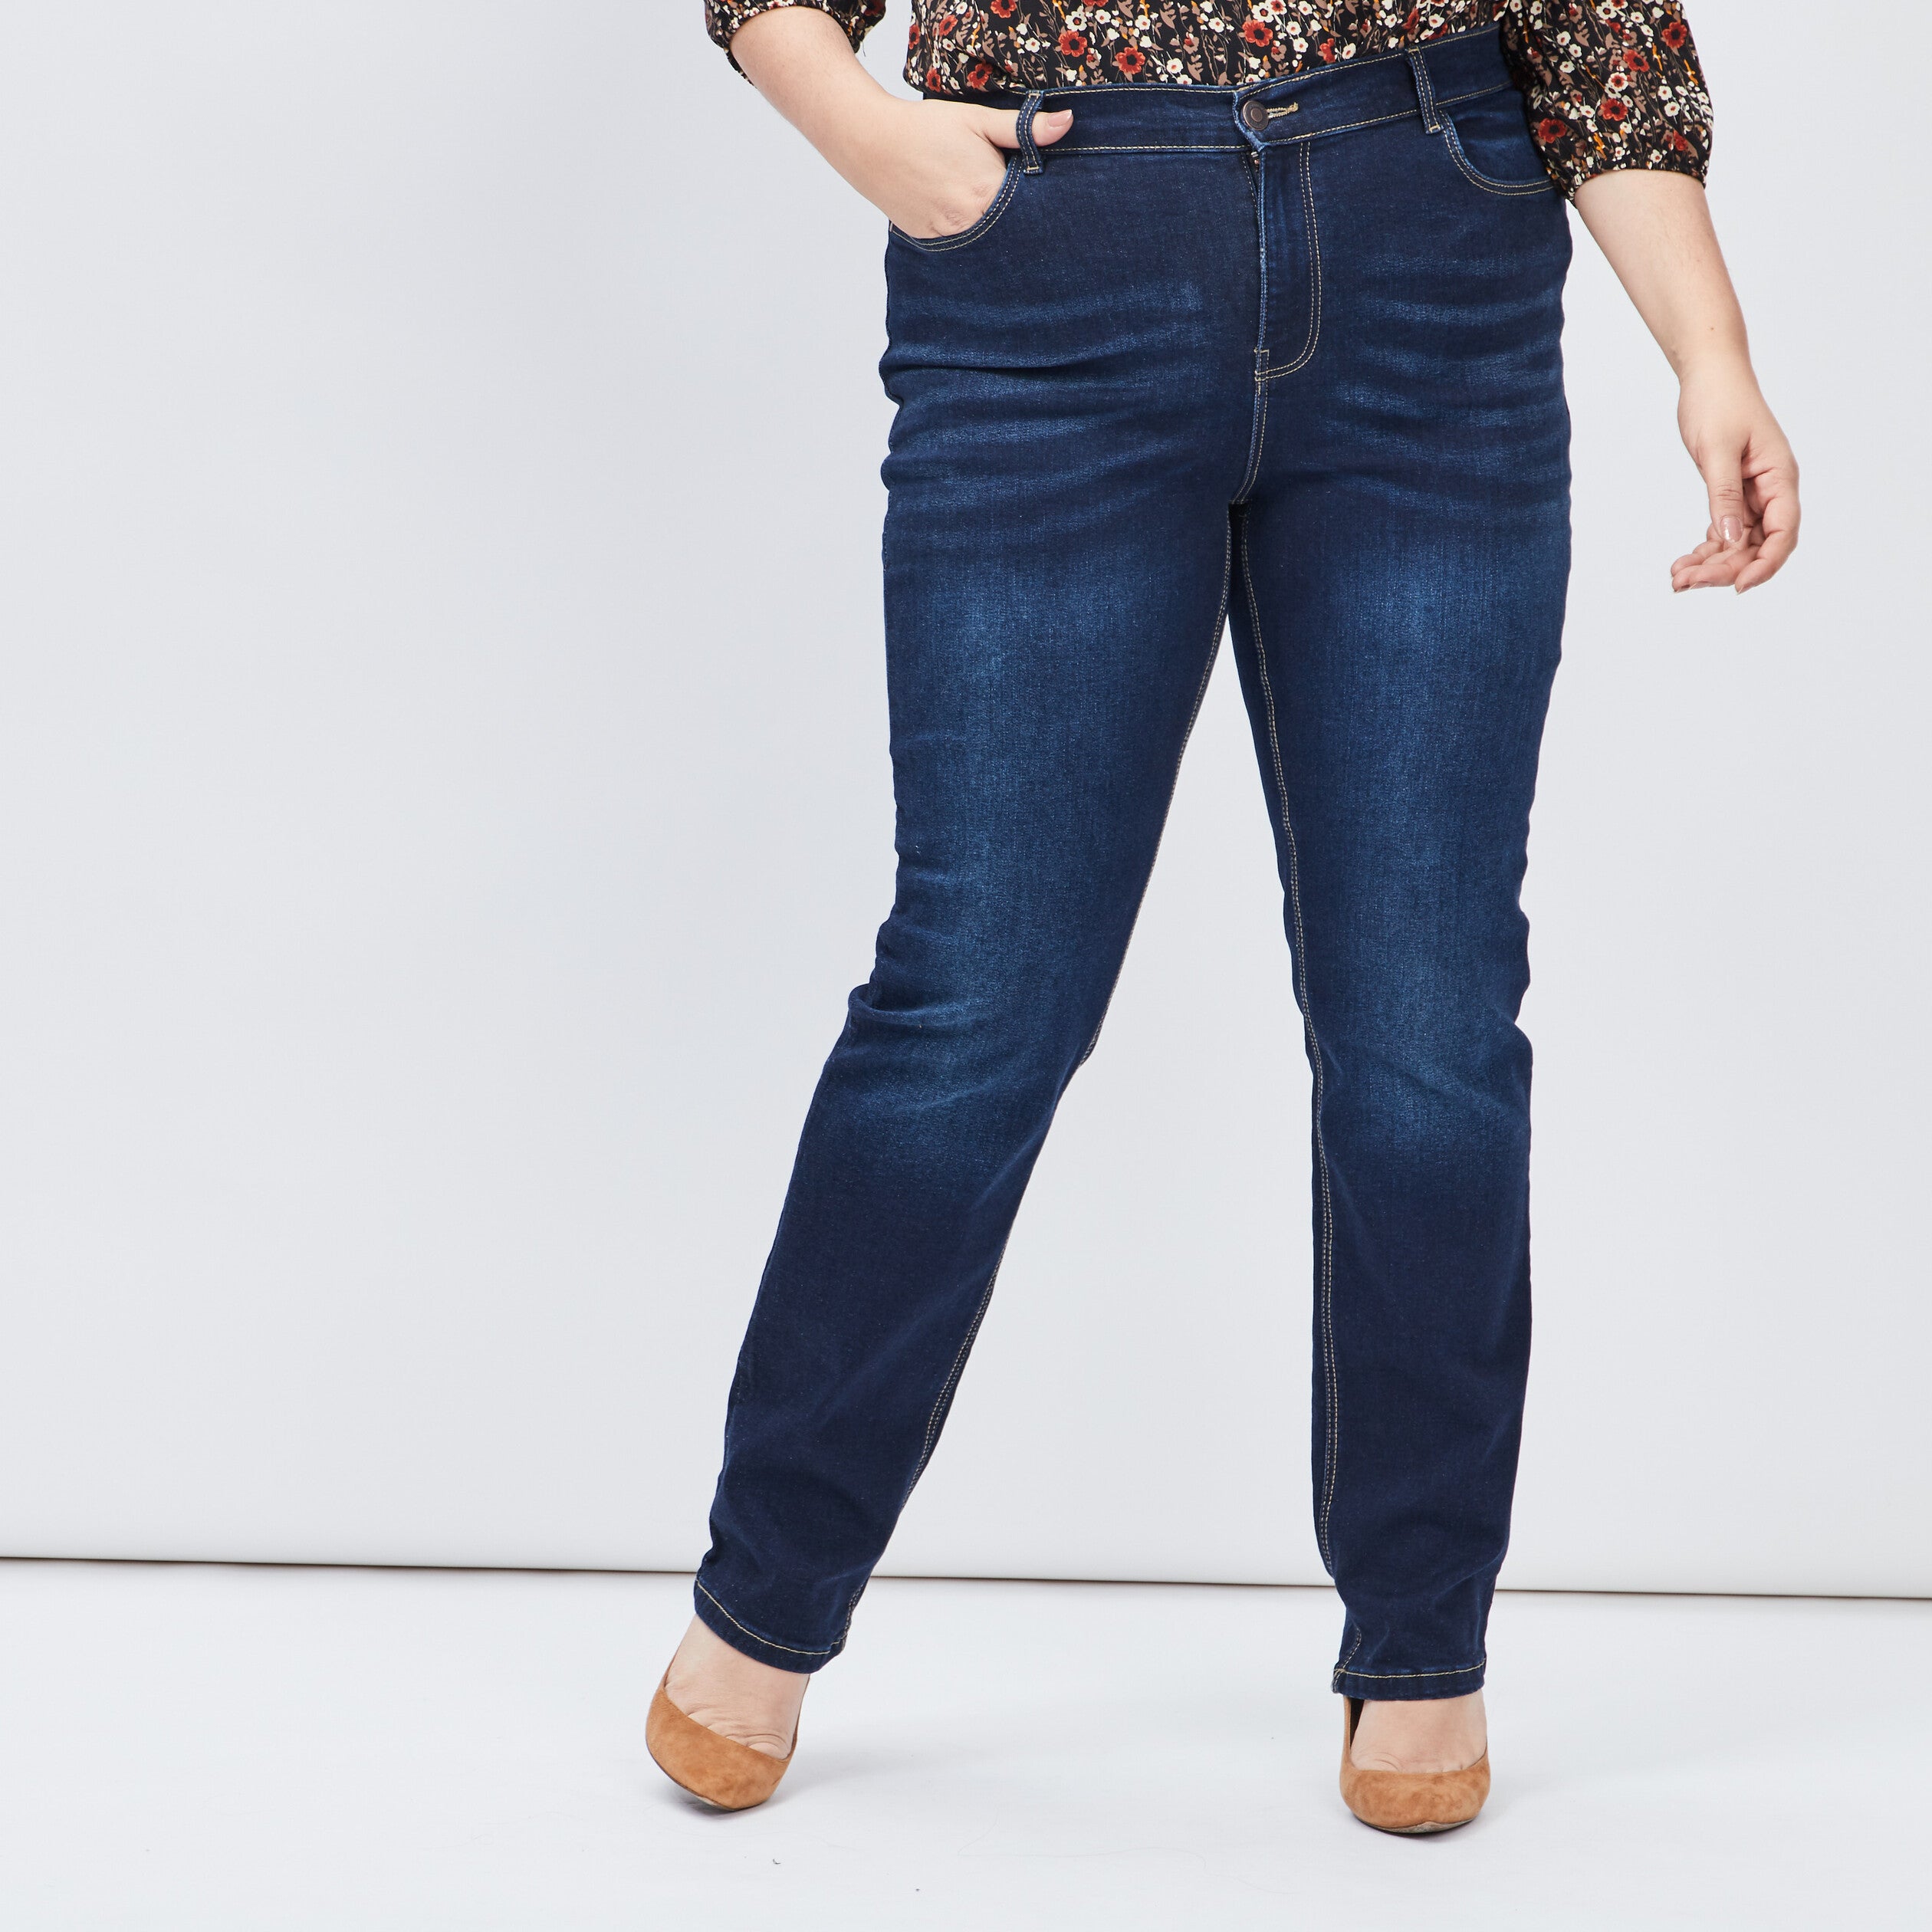 Plus size women's regular jeans plus size raw denim